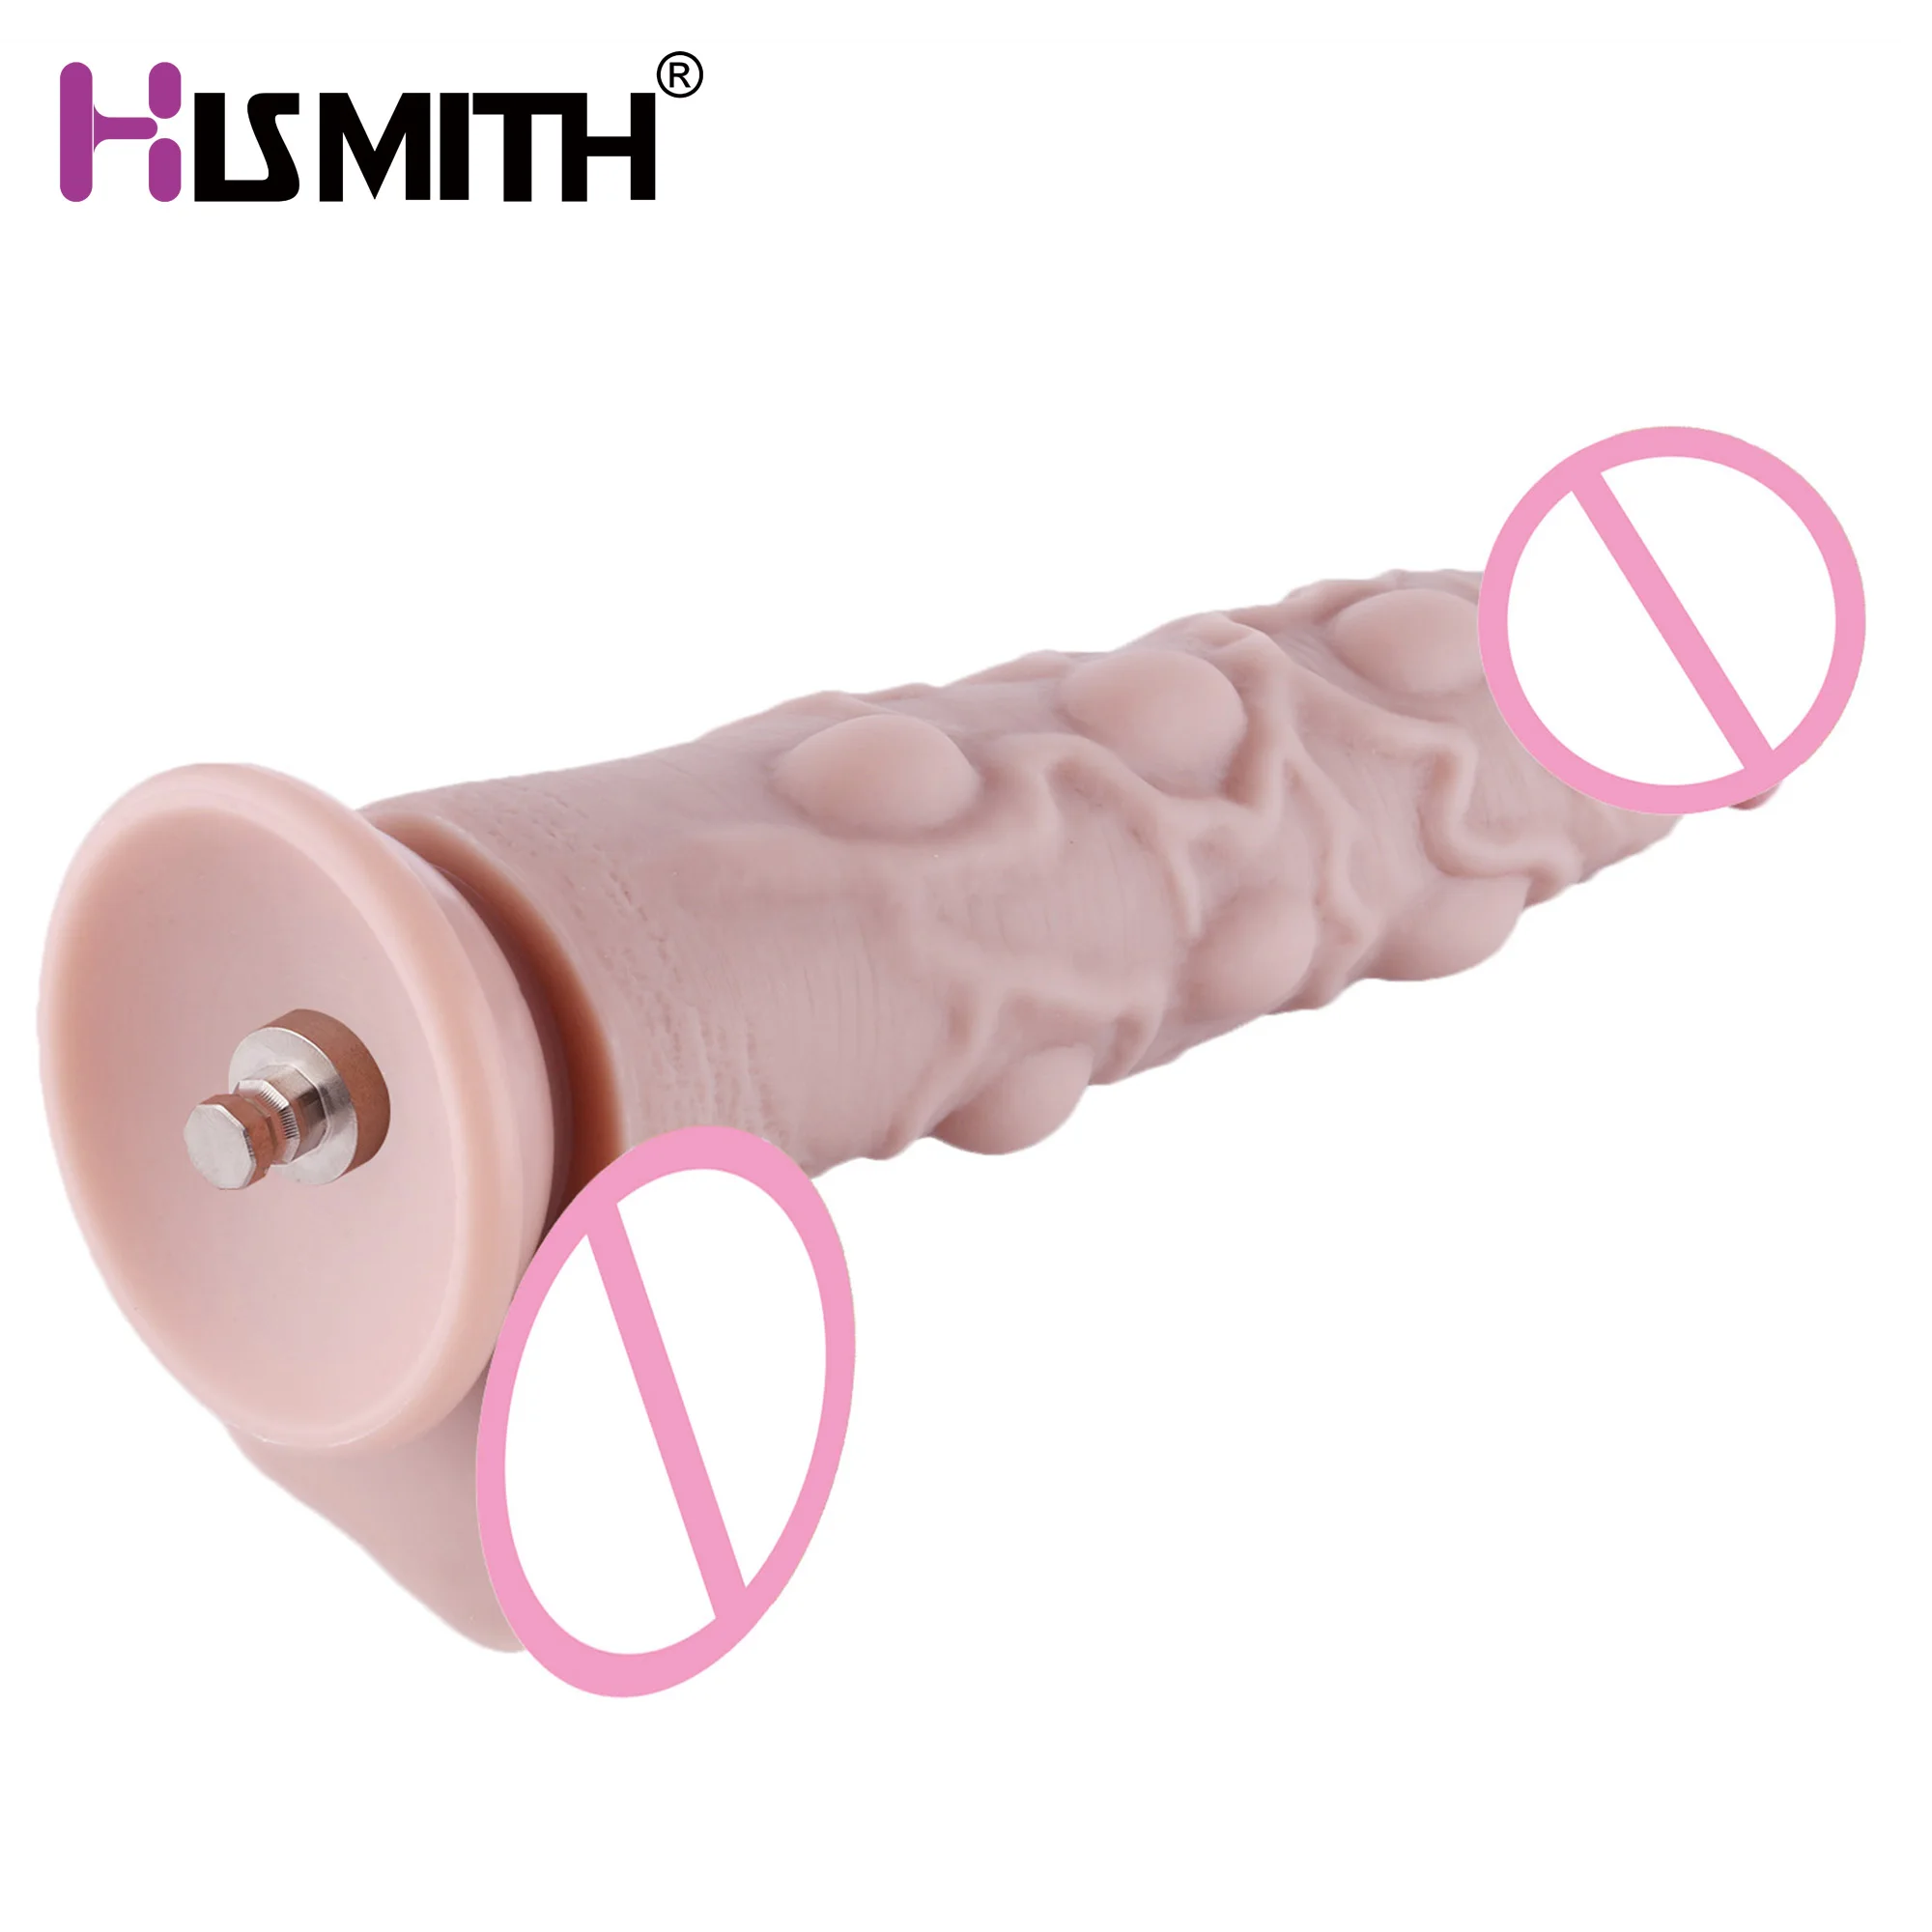 Hismith 8.1” Multi-Bumps Silicone Dildo for KlicLok System Hismith Premium Sex Machine 6.1” Insertable Length Suction cup Dildo